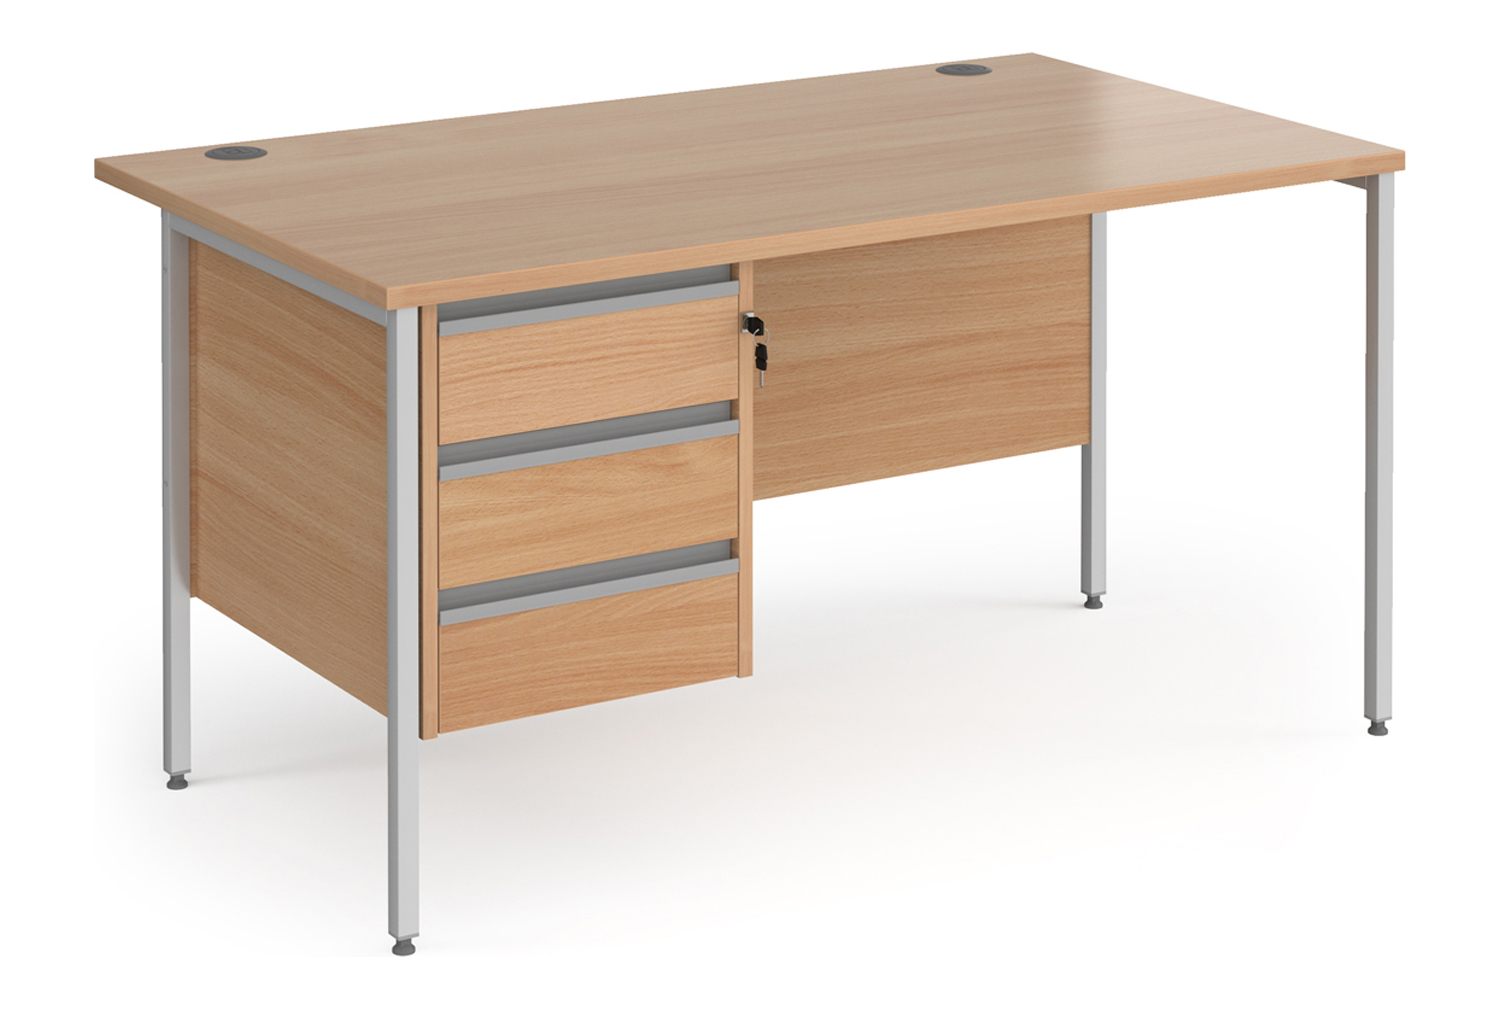 Value Line Classic+ Rectangular H-Leg Office Desk 3 Drawers (Silver Leg), 140wx80dx73h (cm), Beech, Fully Installed